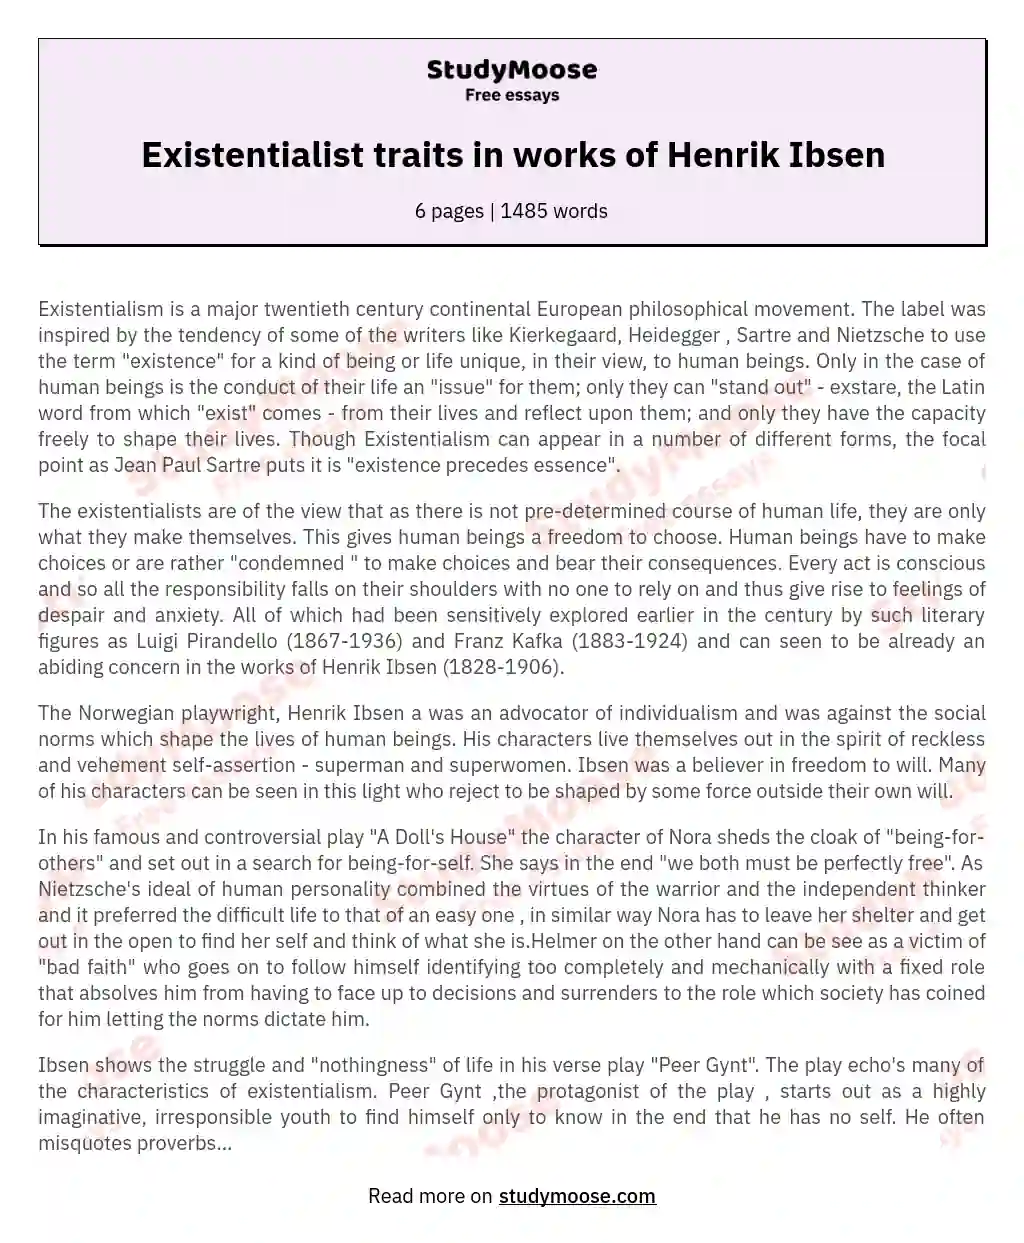 Existentialist traits in works of Henrik Ibsen